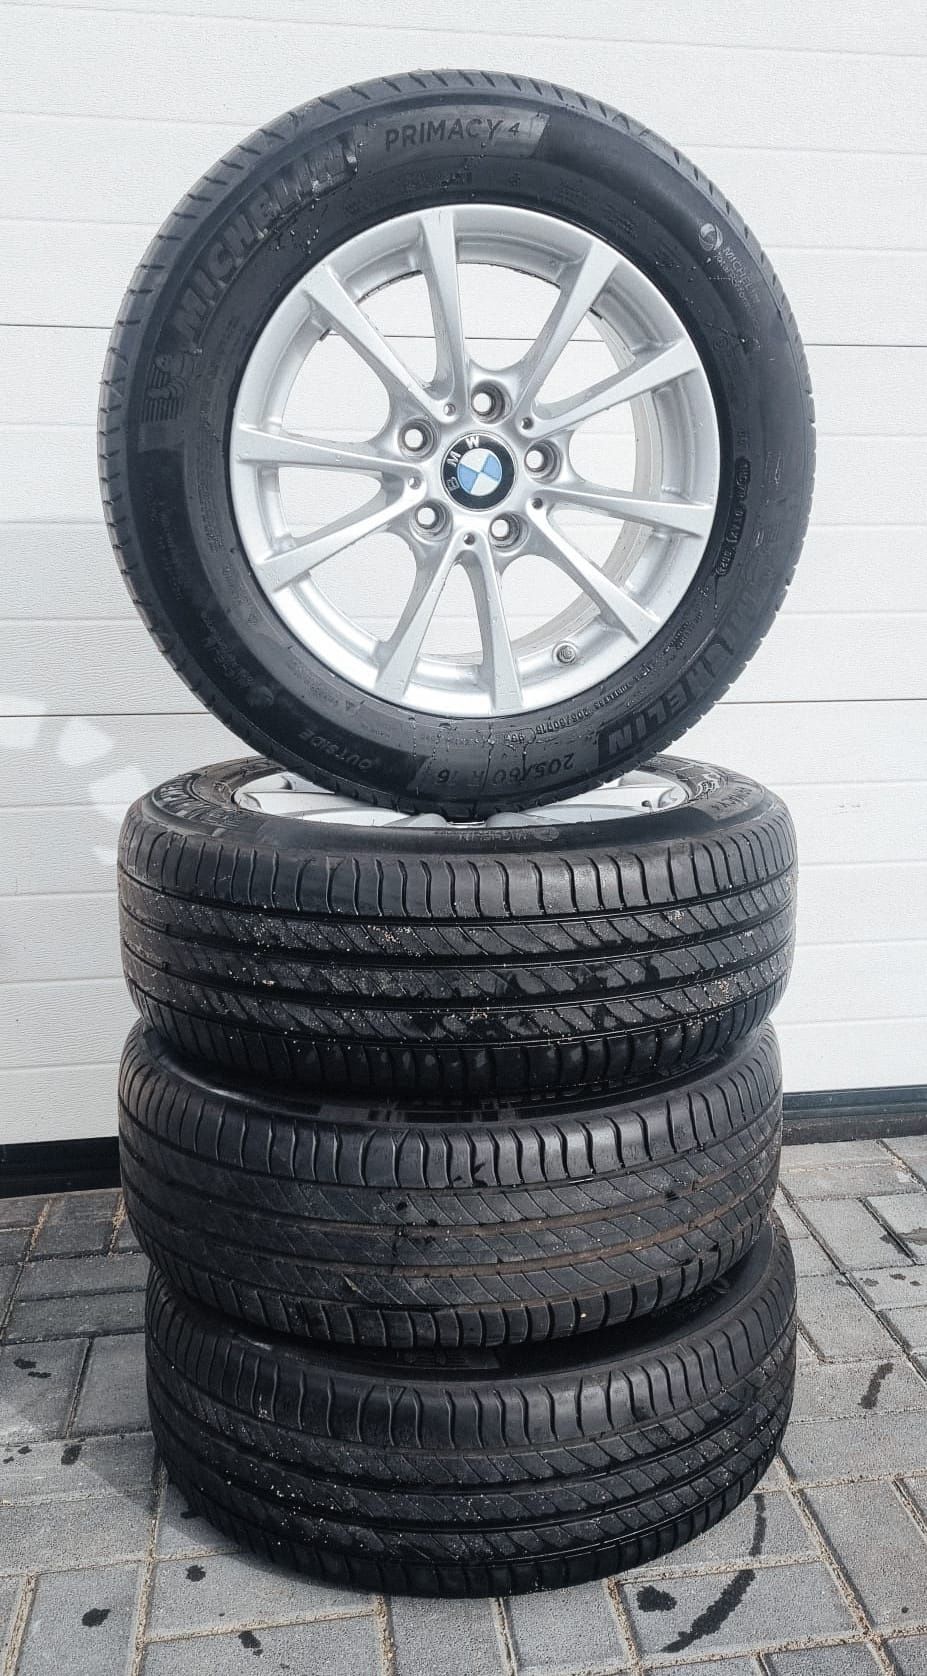 Oryginalne felgi BMW z oponami letnimi Michelin Primacy 4 205/60 16